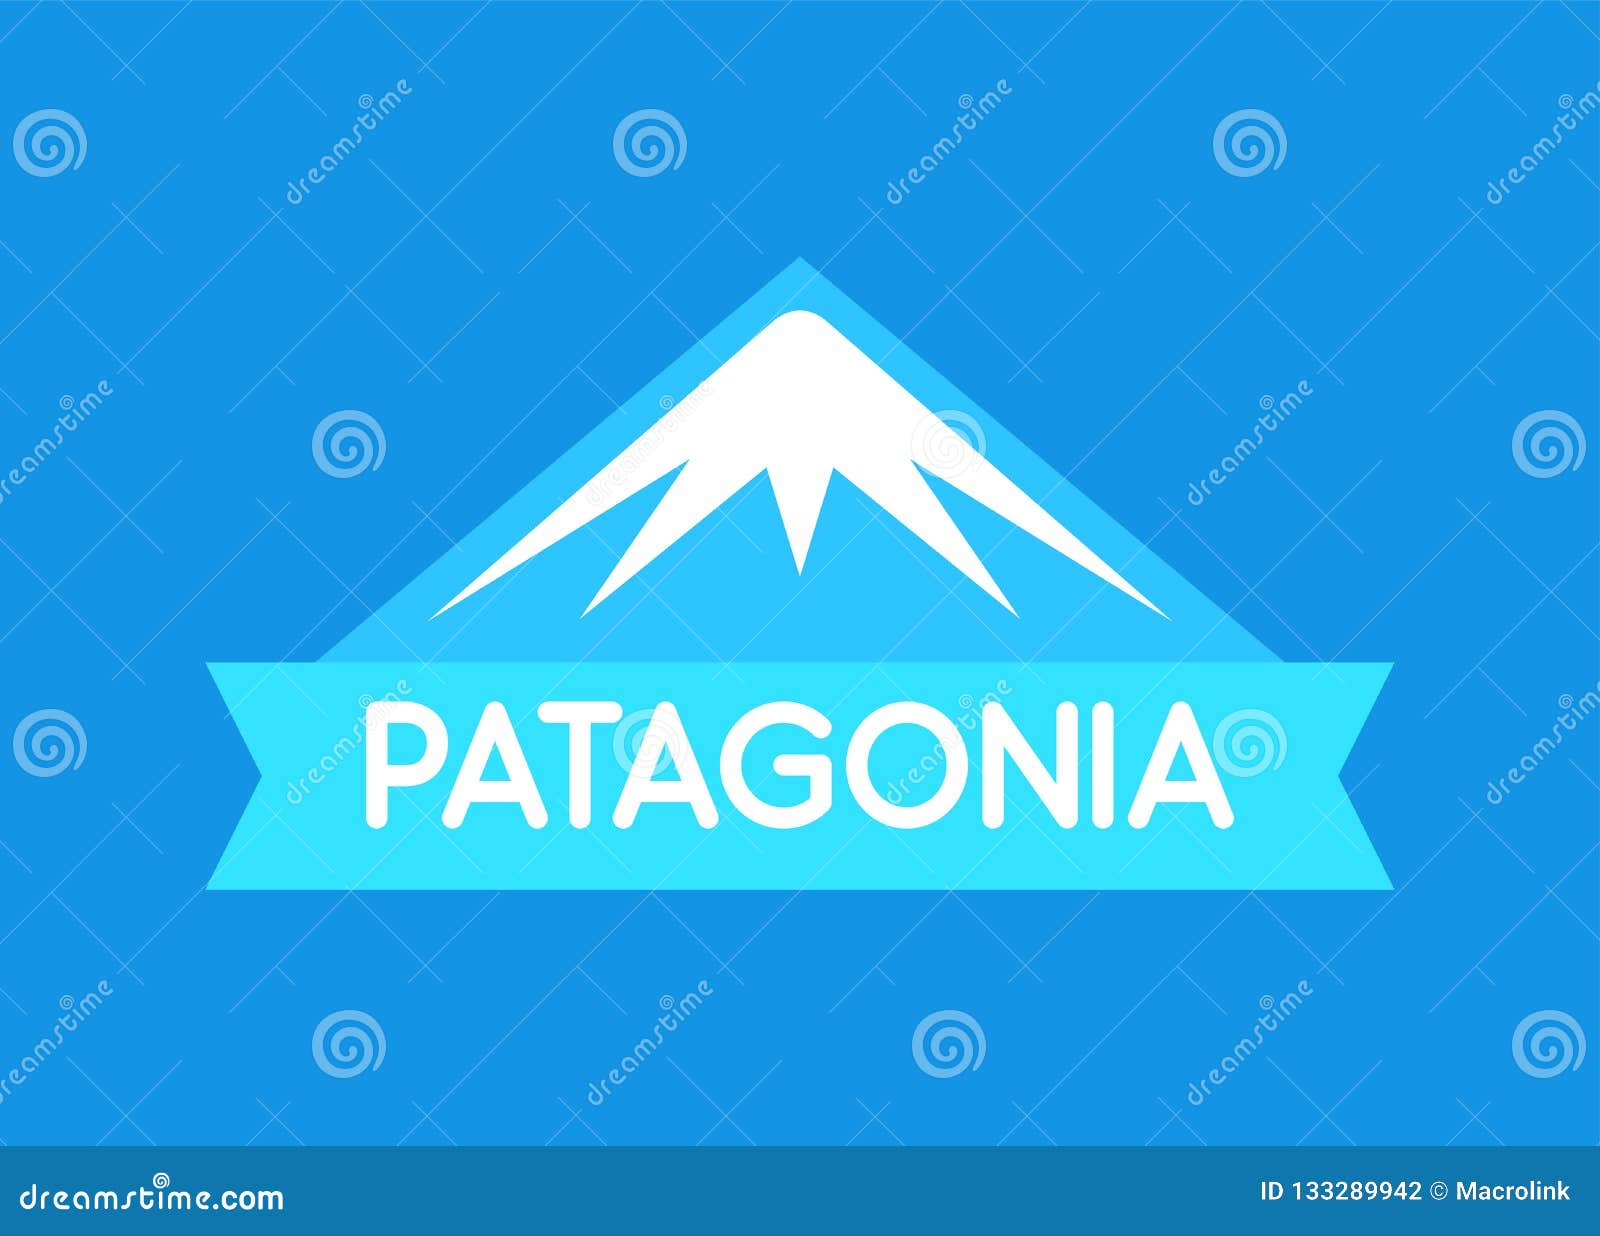 Patagonia, Vector Emblem in Blue Color of South American Patagonia ...